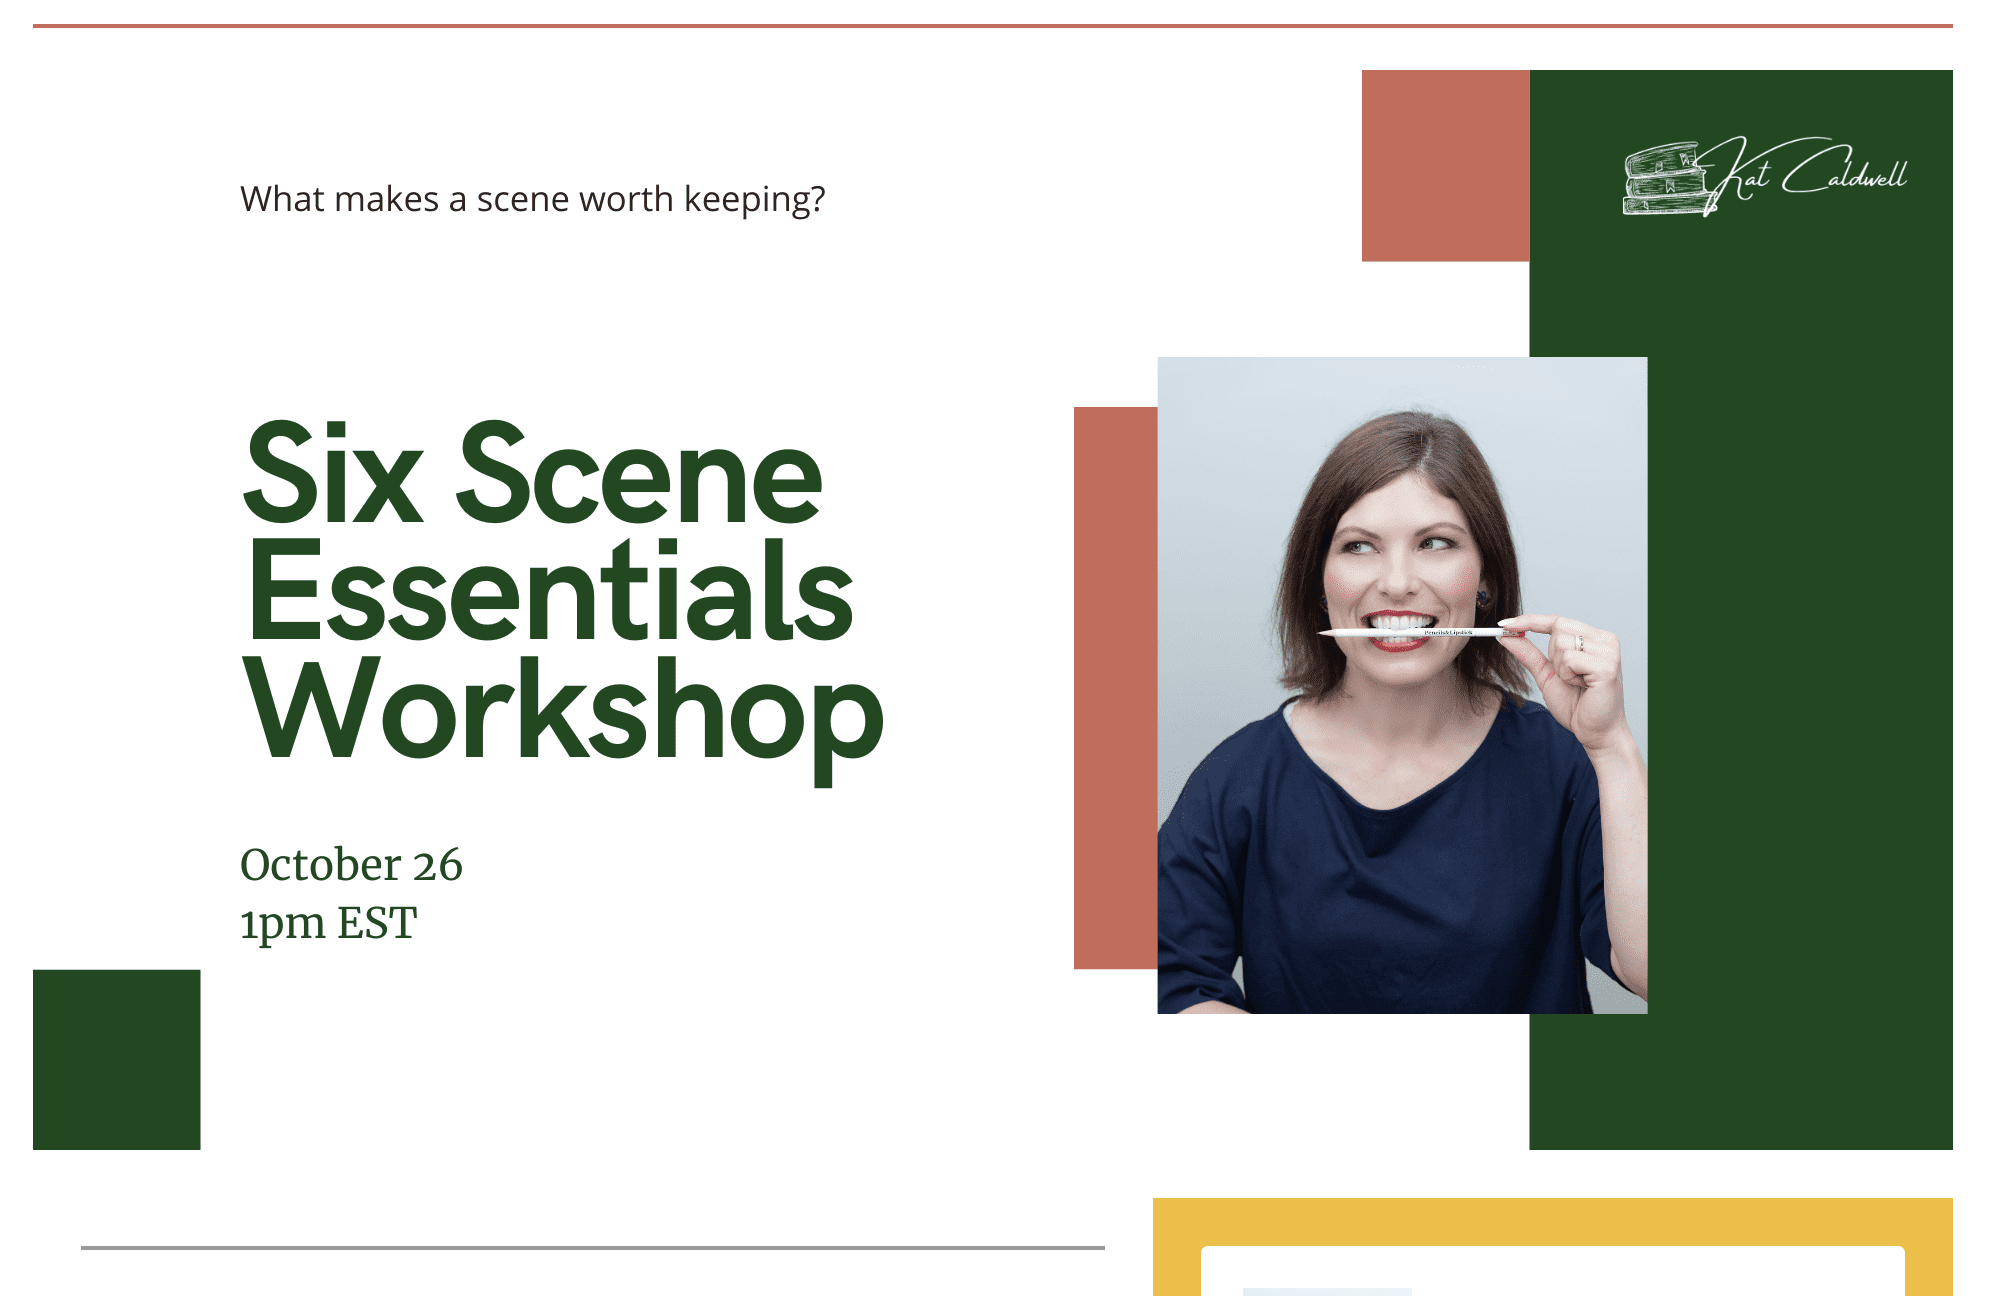 Six Scene Essentials Workshop with Kat Caldwell